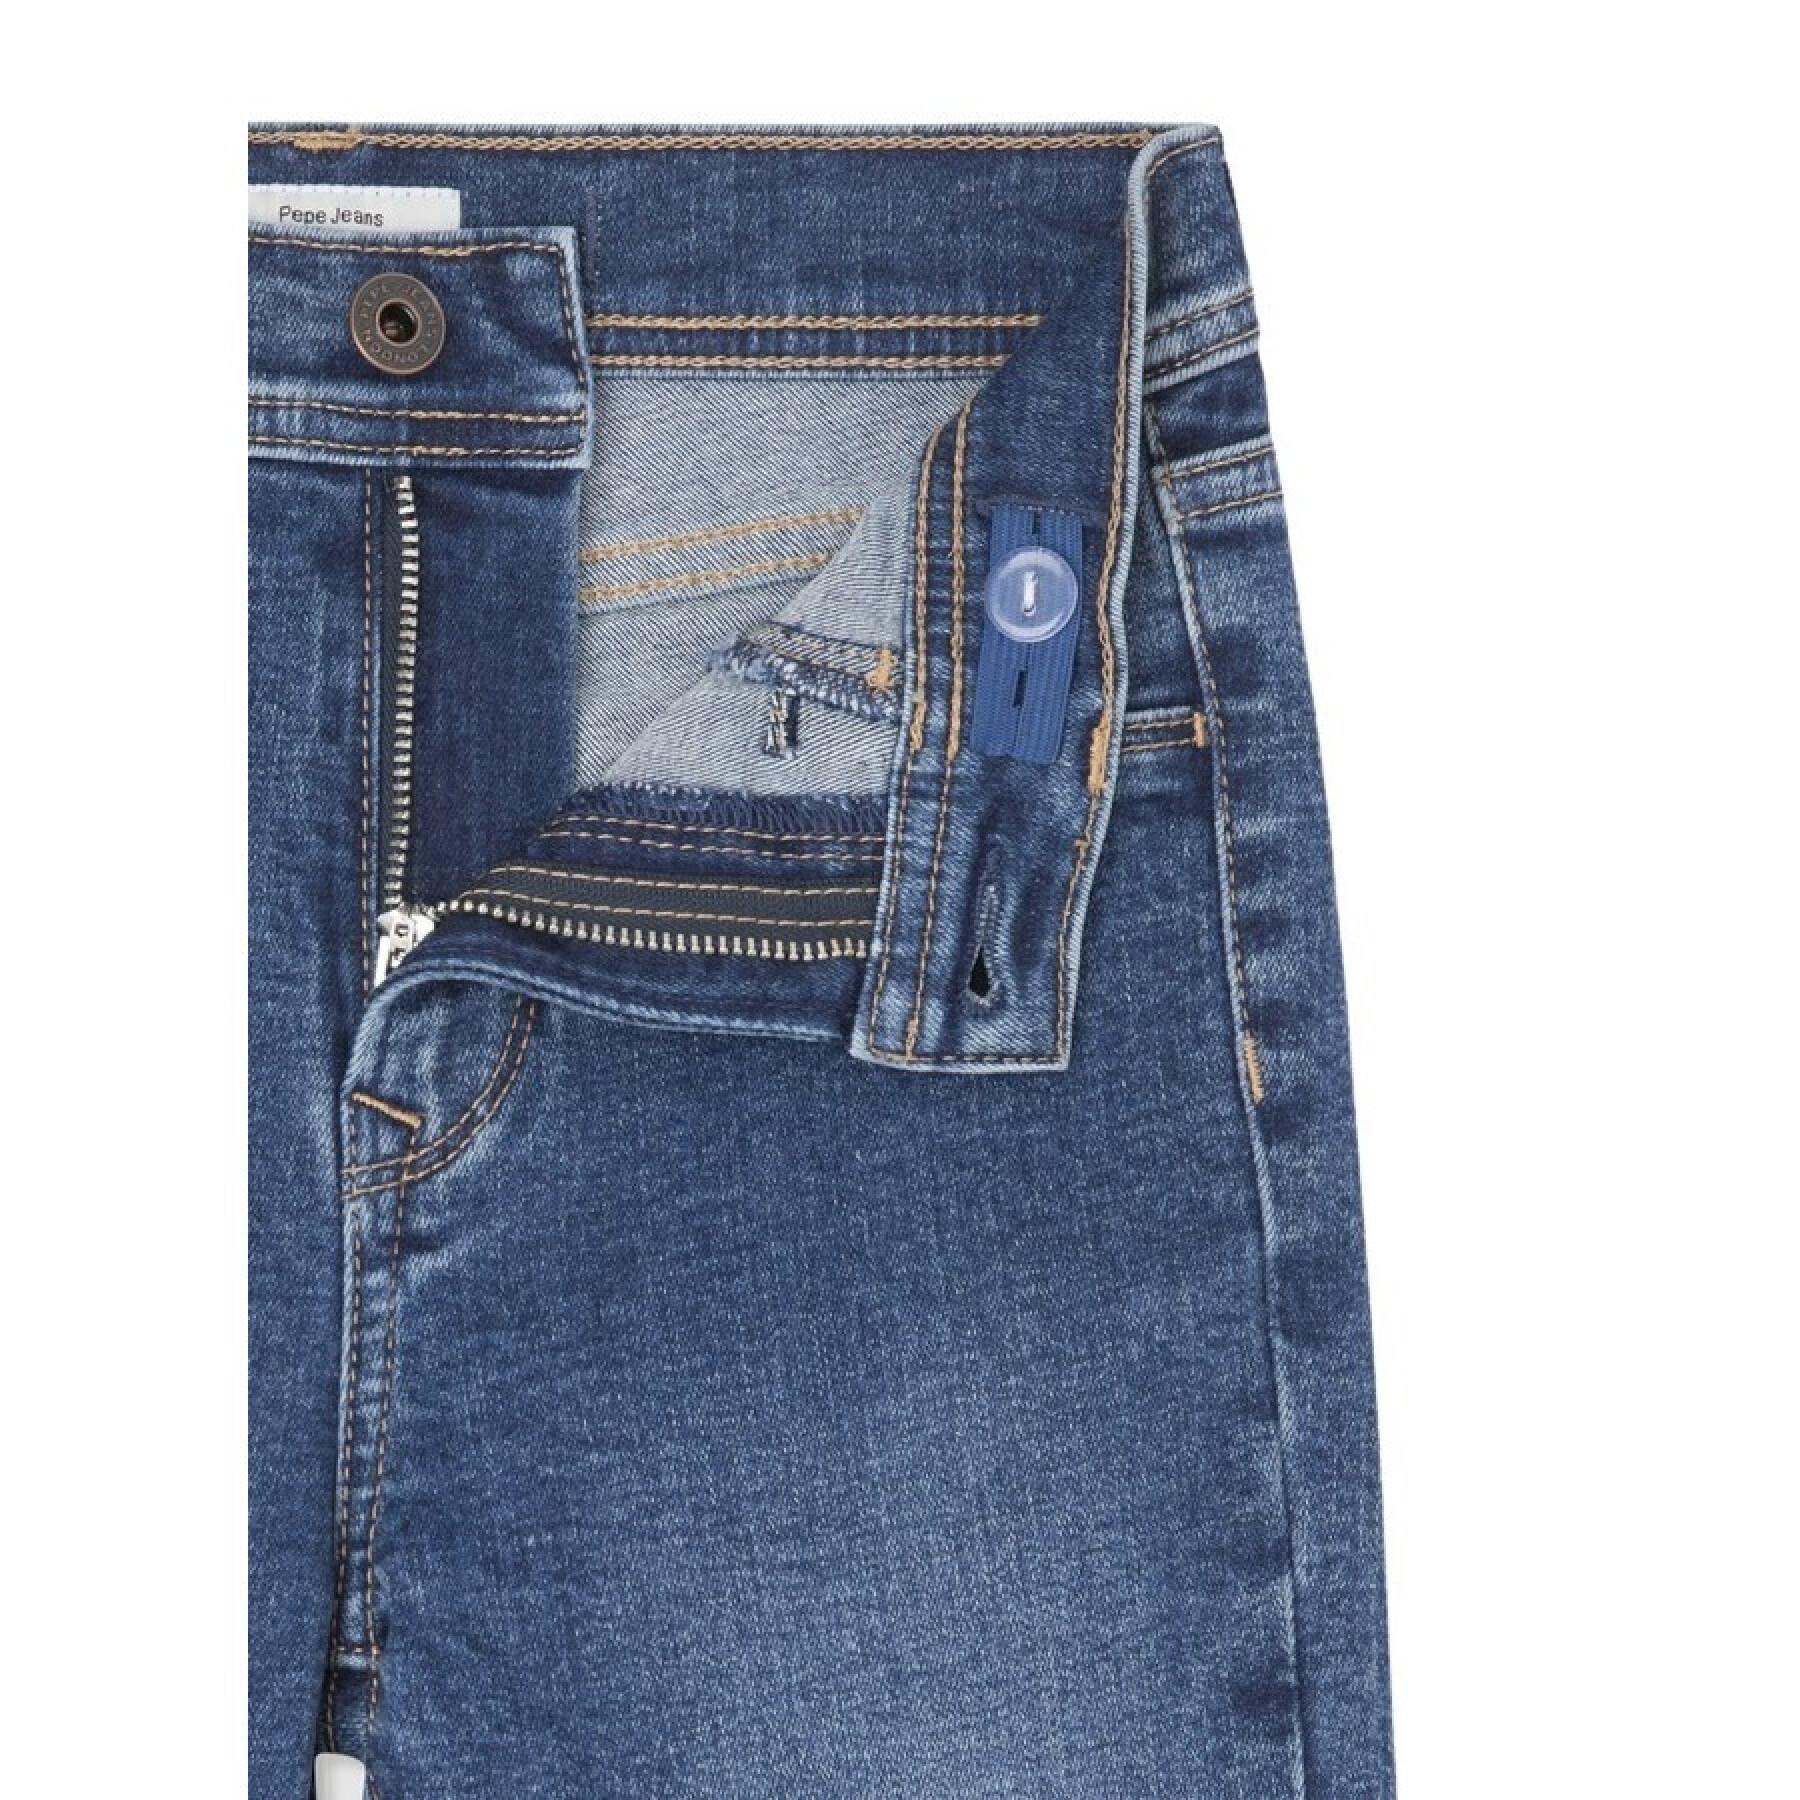 Jeans för flickor Pepe Jeans Madison